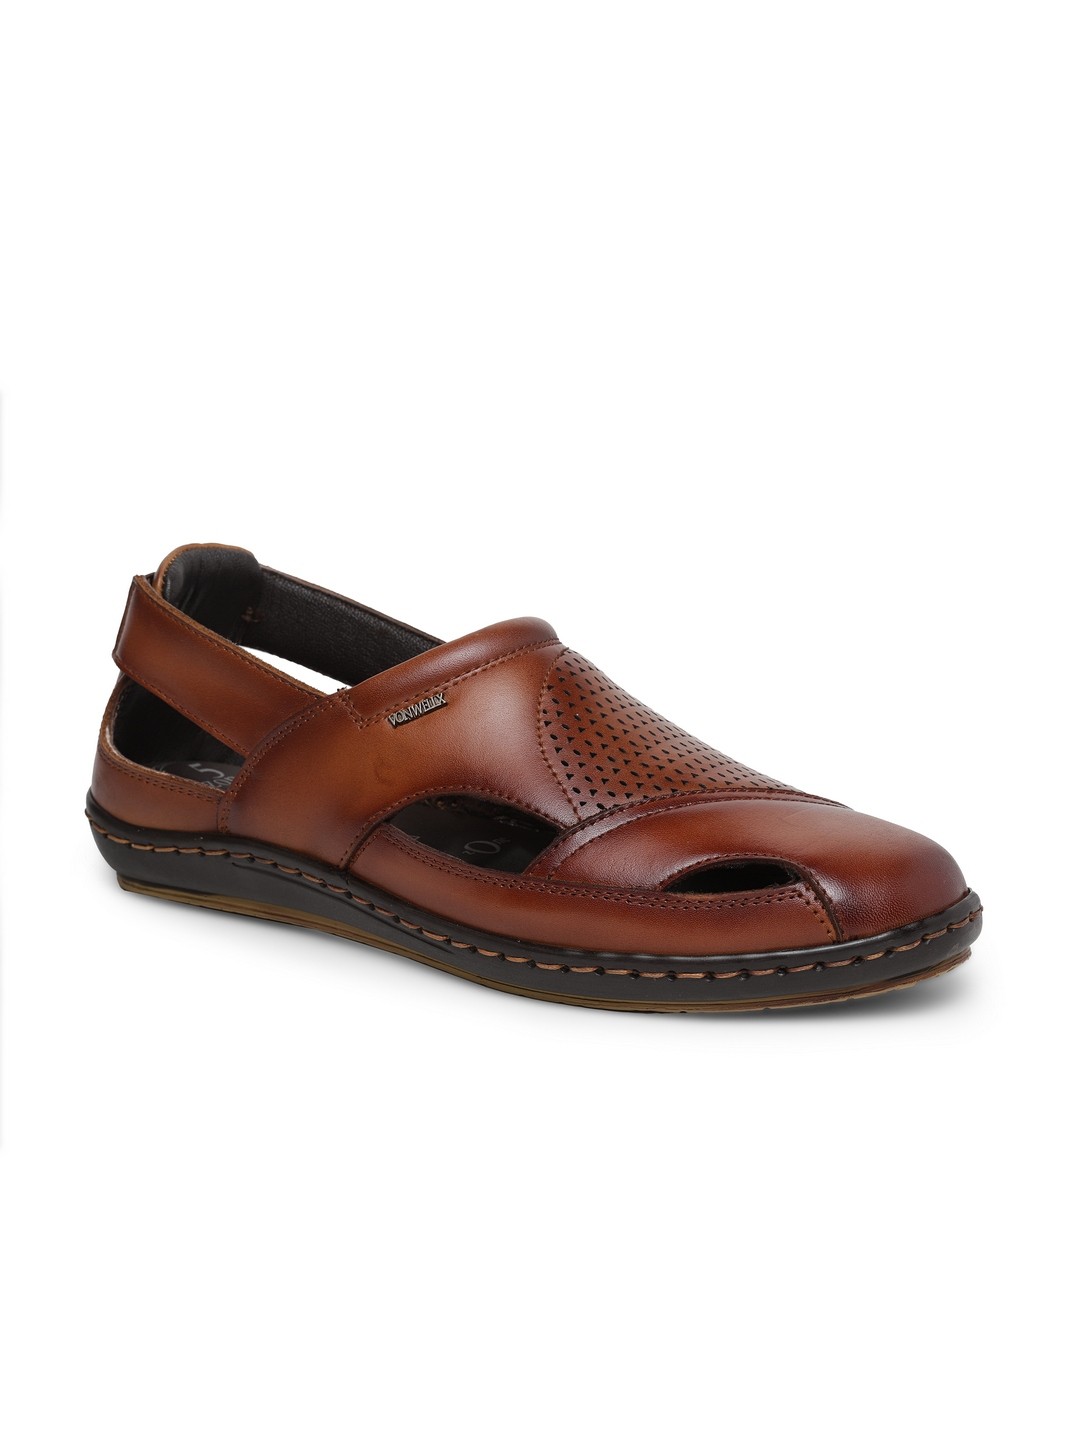 Buy Von Wellx Germany Comfort Men's Tan Sandal Eddie Online in Ludhiana